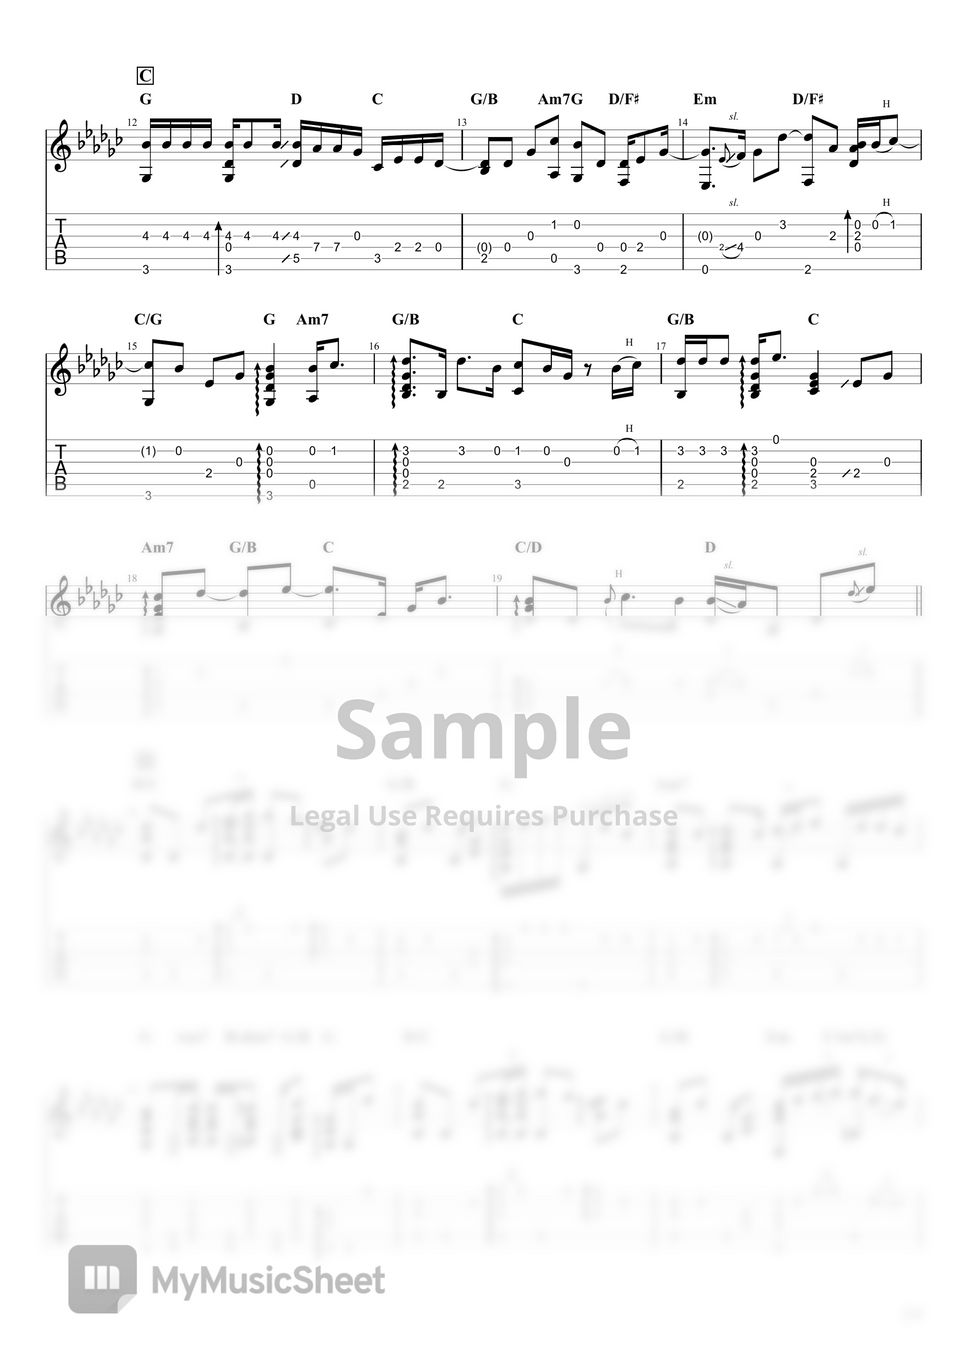 BUMP OF CHIKEN - スノースマイル (ソロギター、fingerstyle) by kattin025